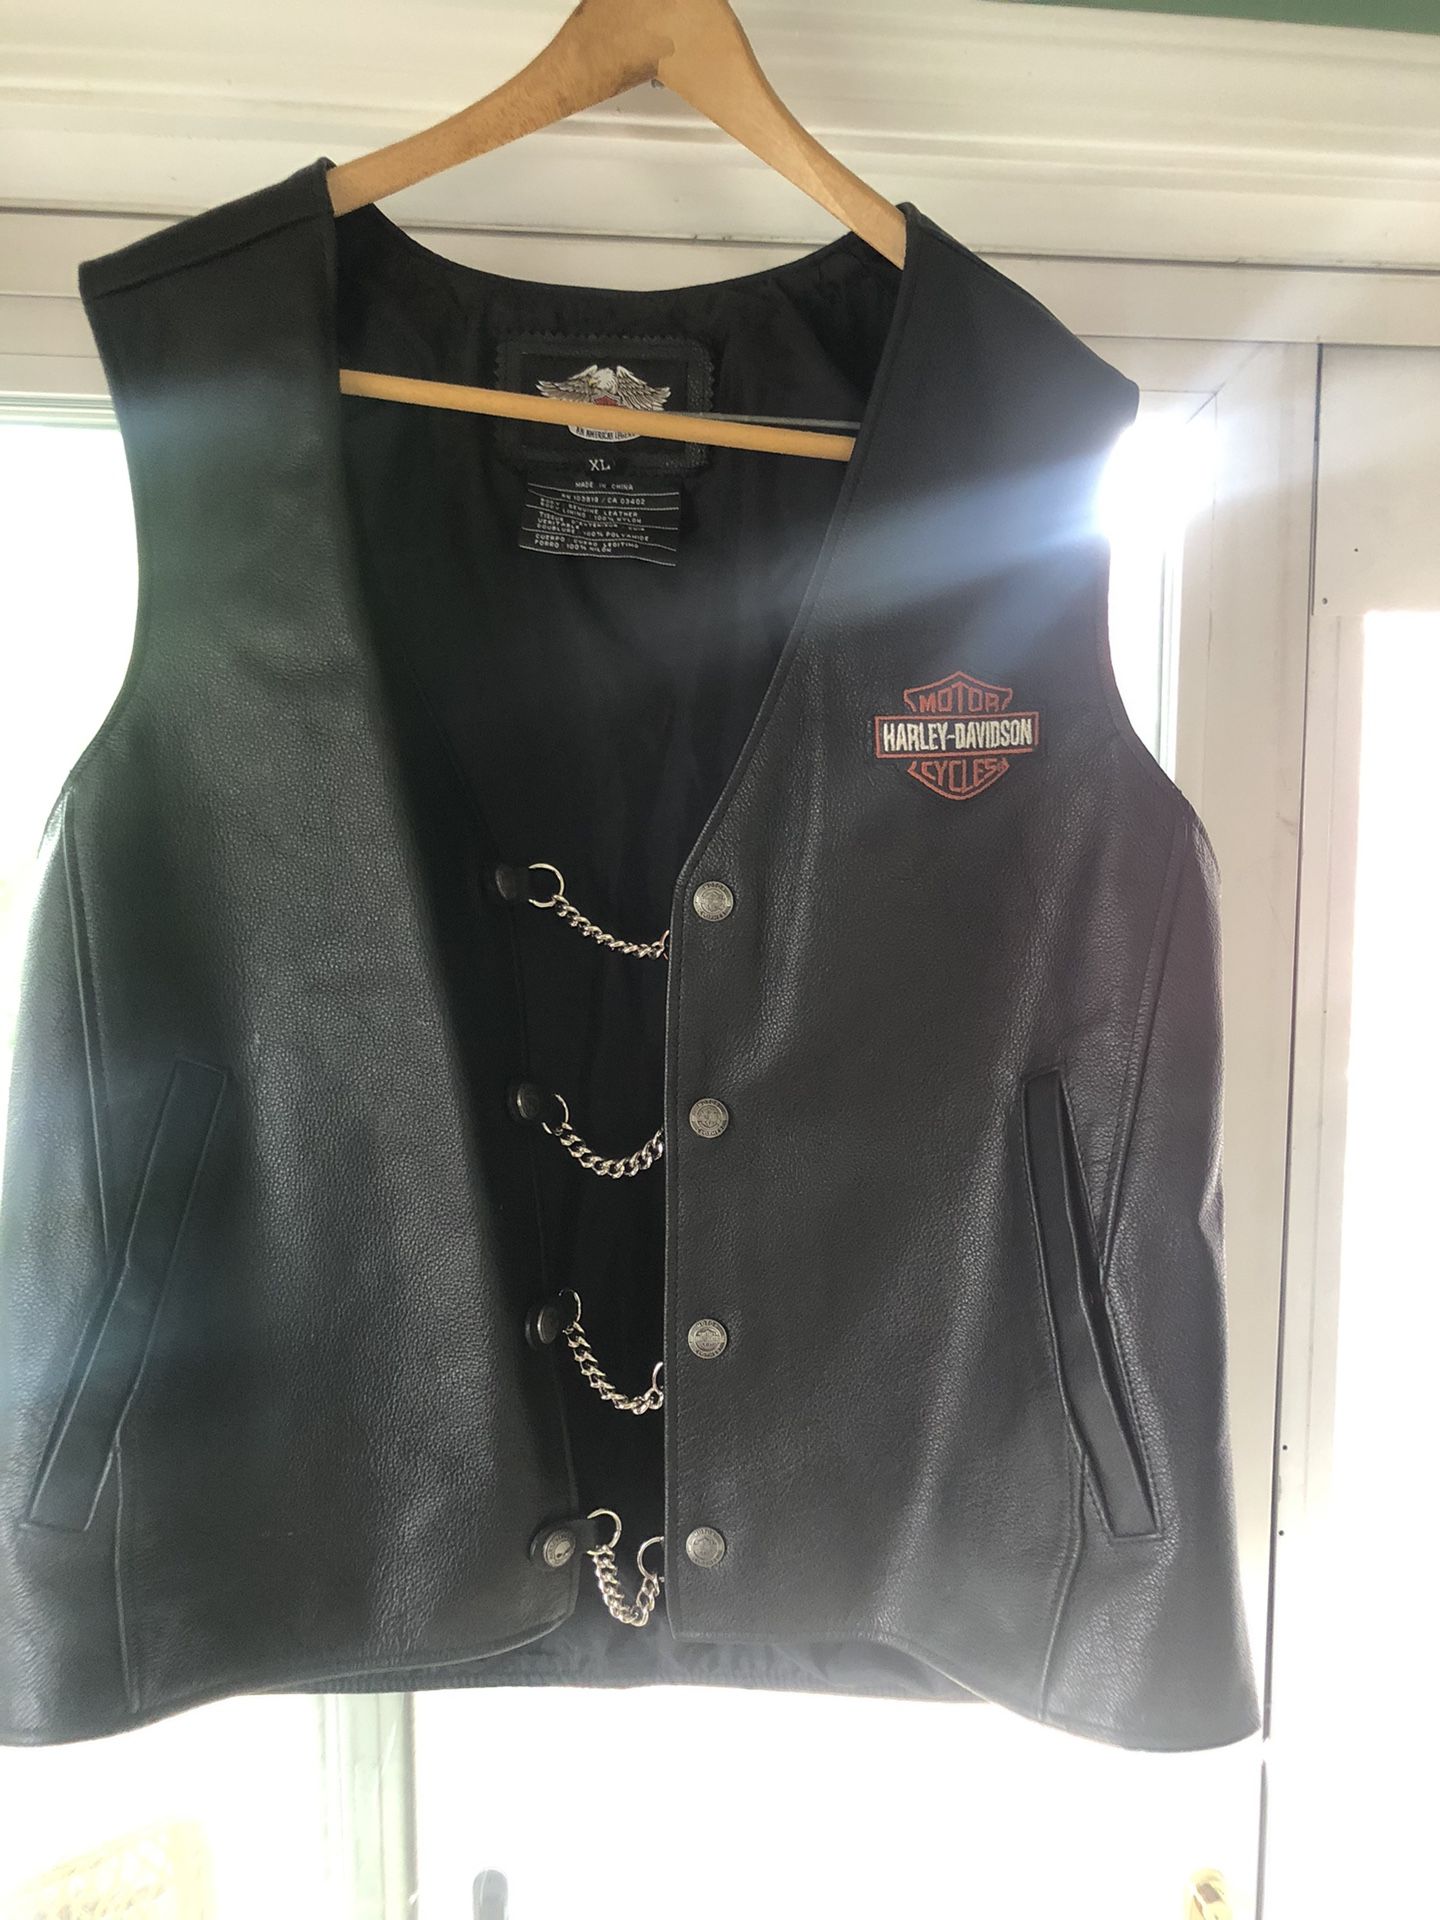 Harley Davidson motorcycle leather vest in excellent shape.